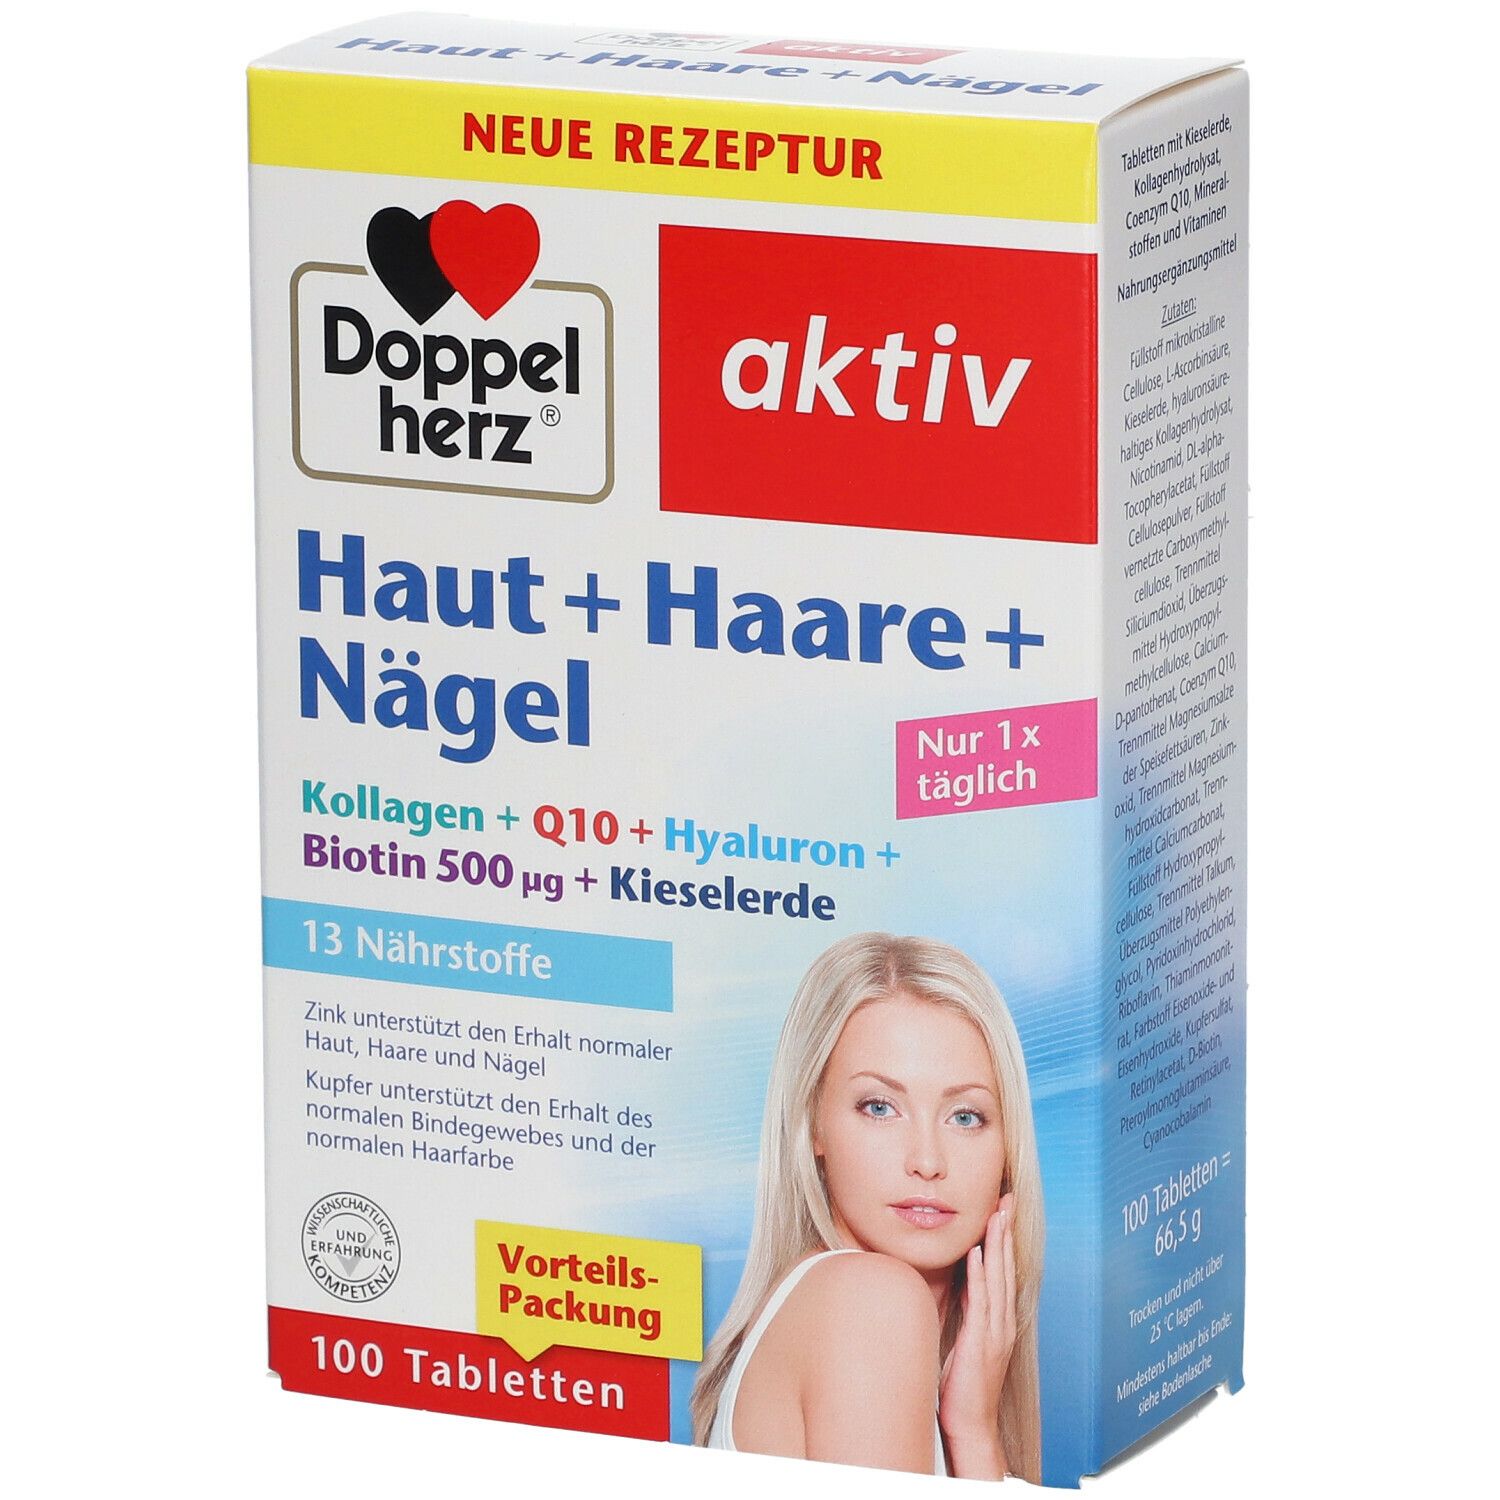 Doppelherz® aktiv Haut + Haare + Nägel shopapotheke.ch